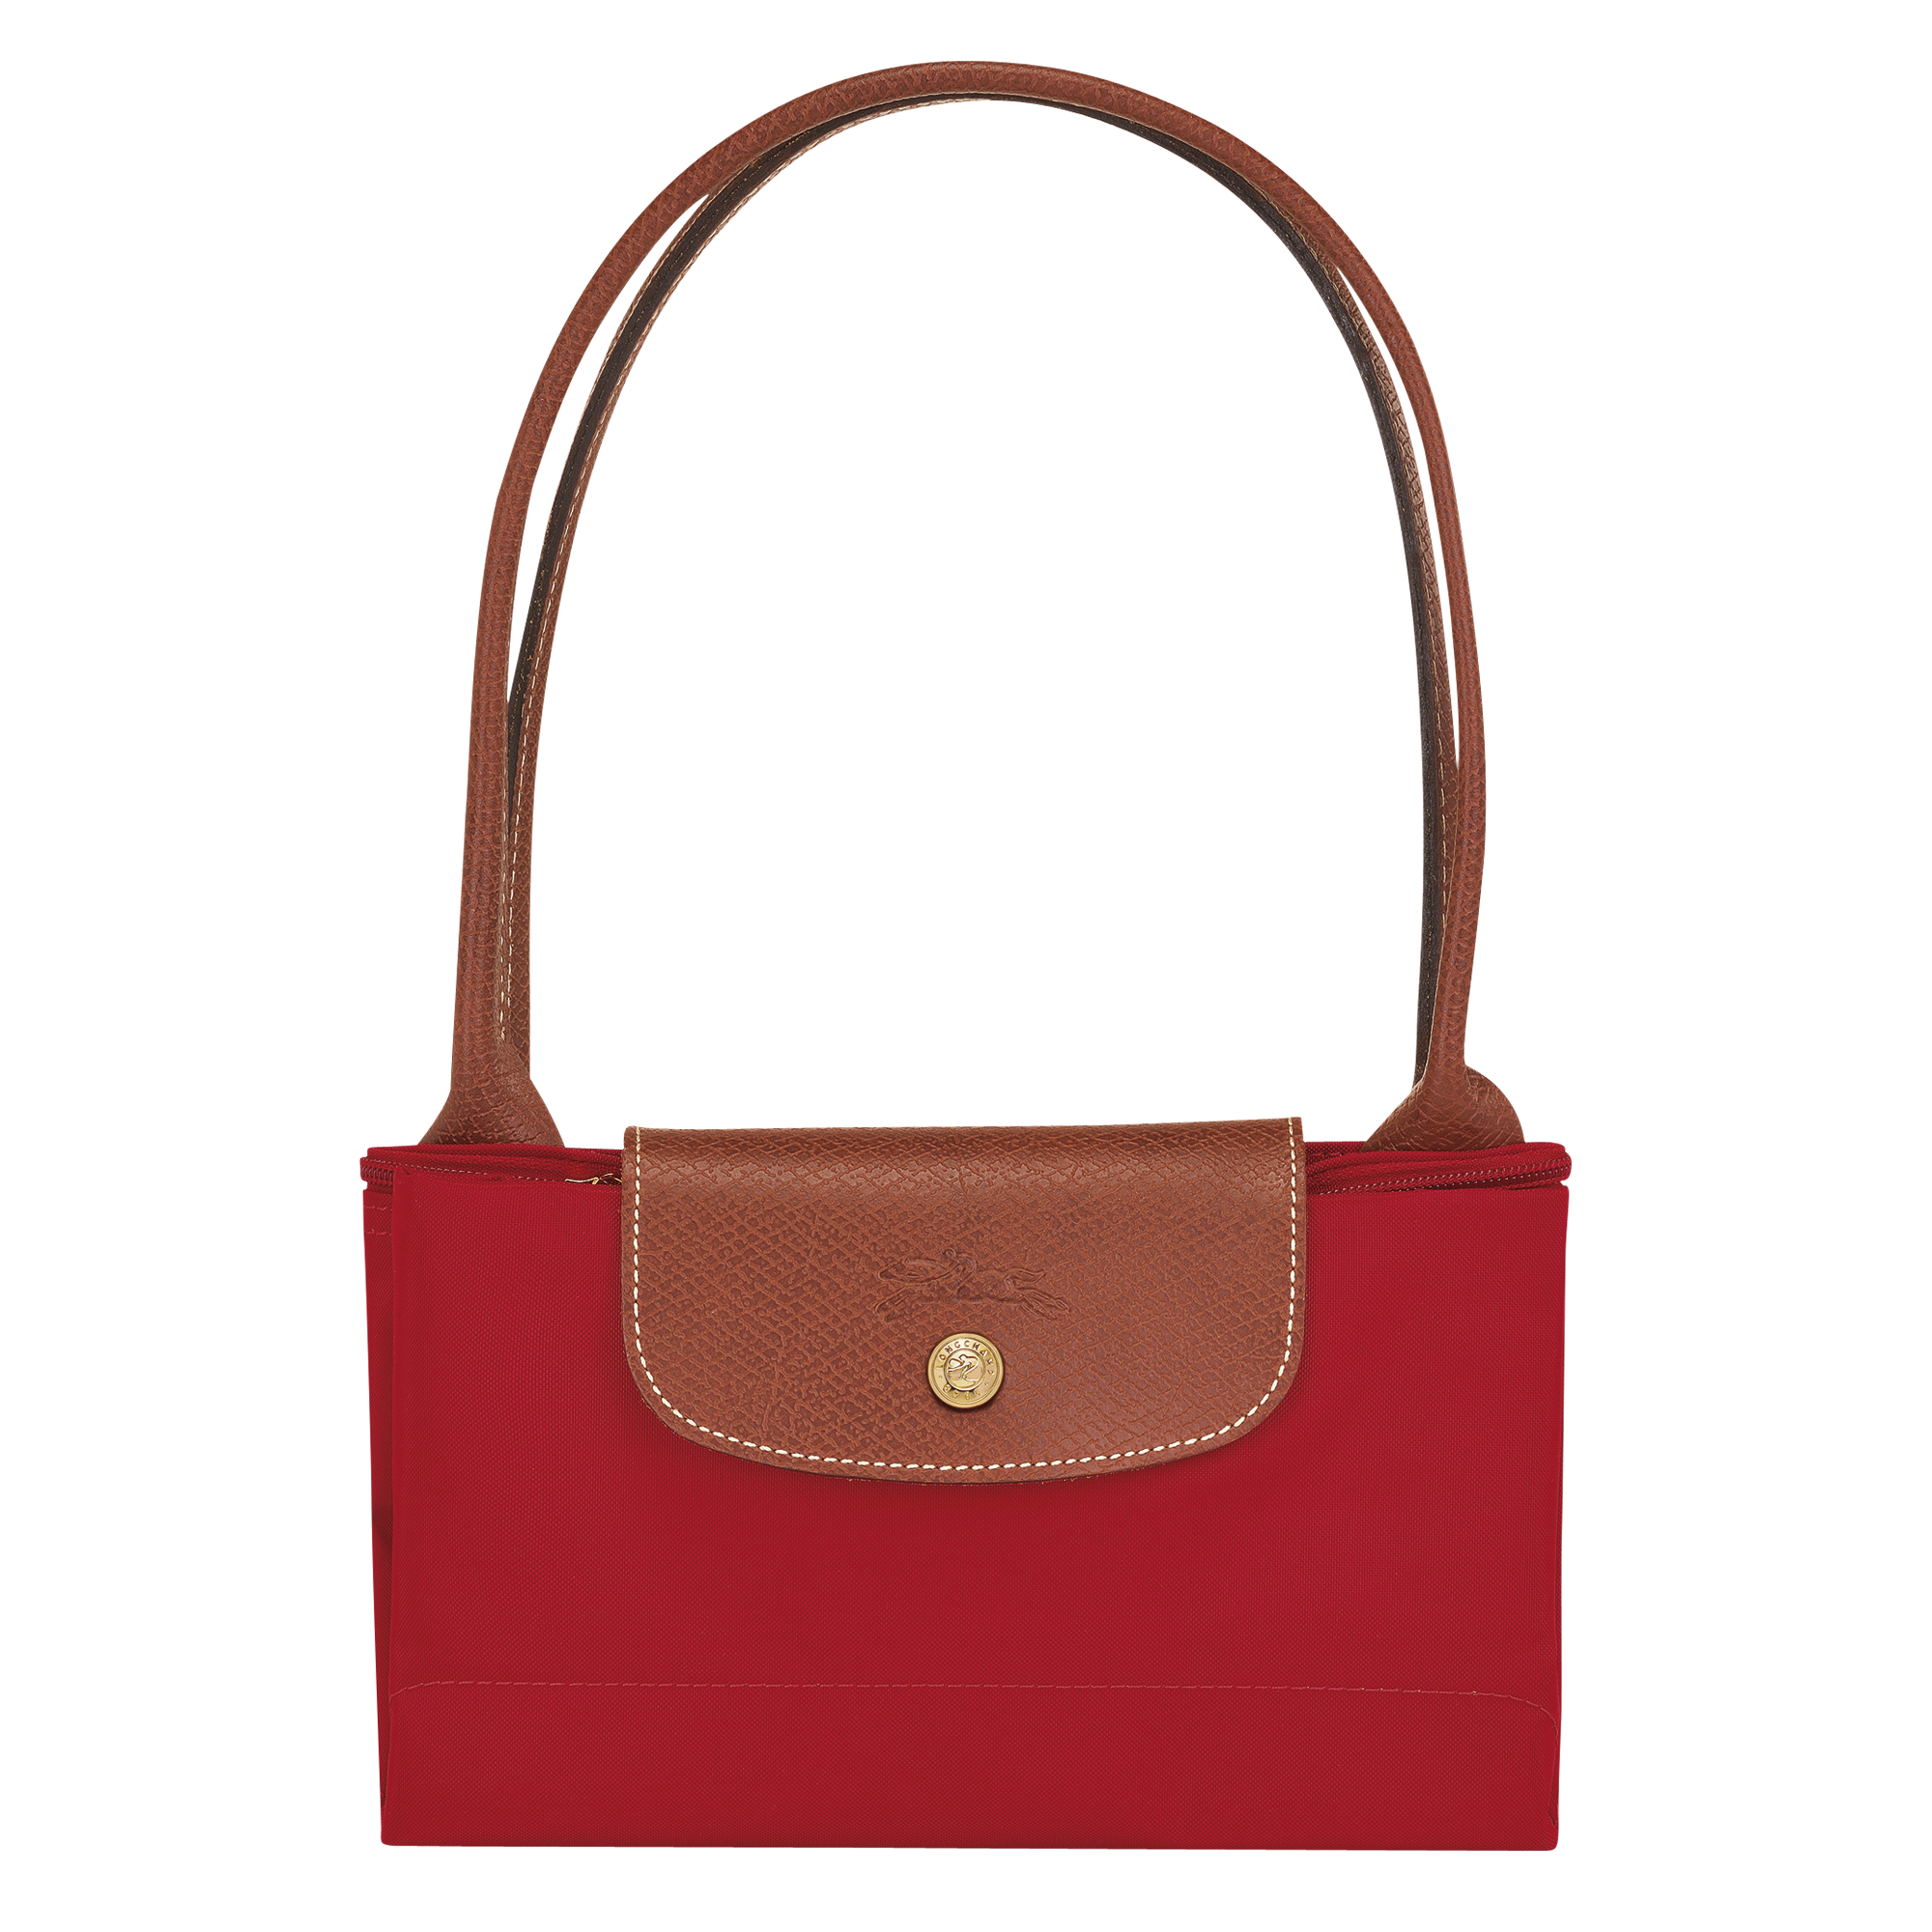 Longchamp Le Pliage Lgp Clutch Bag in Red